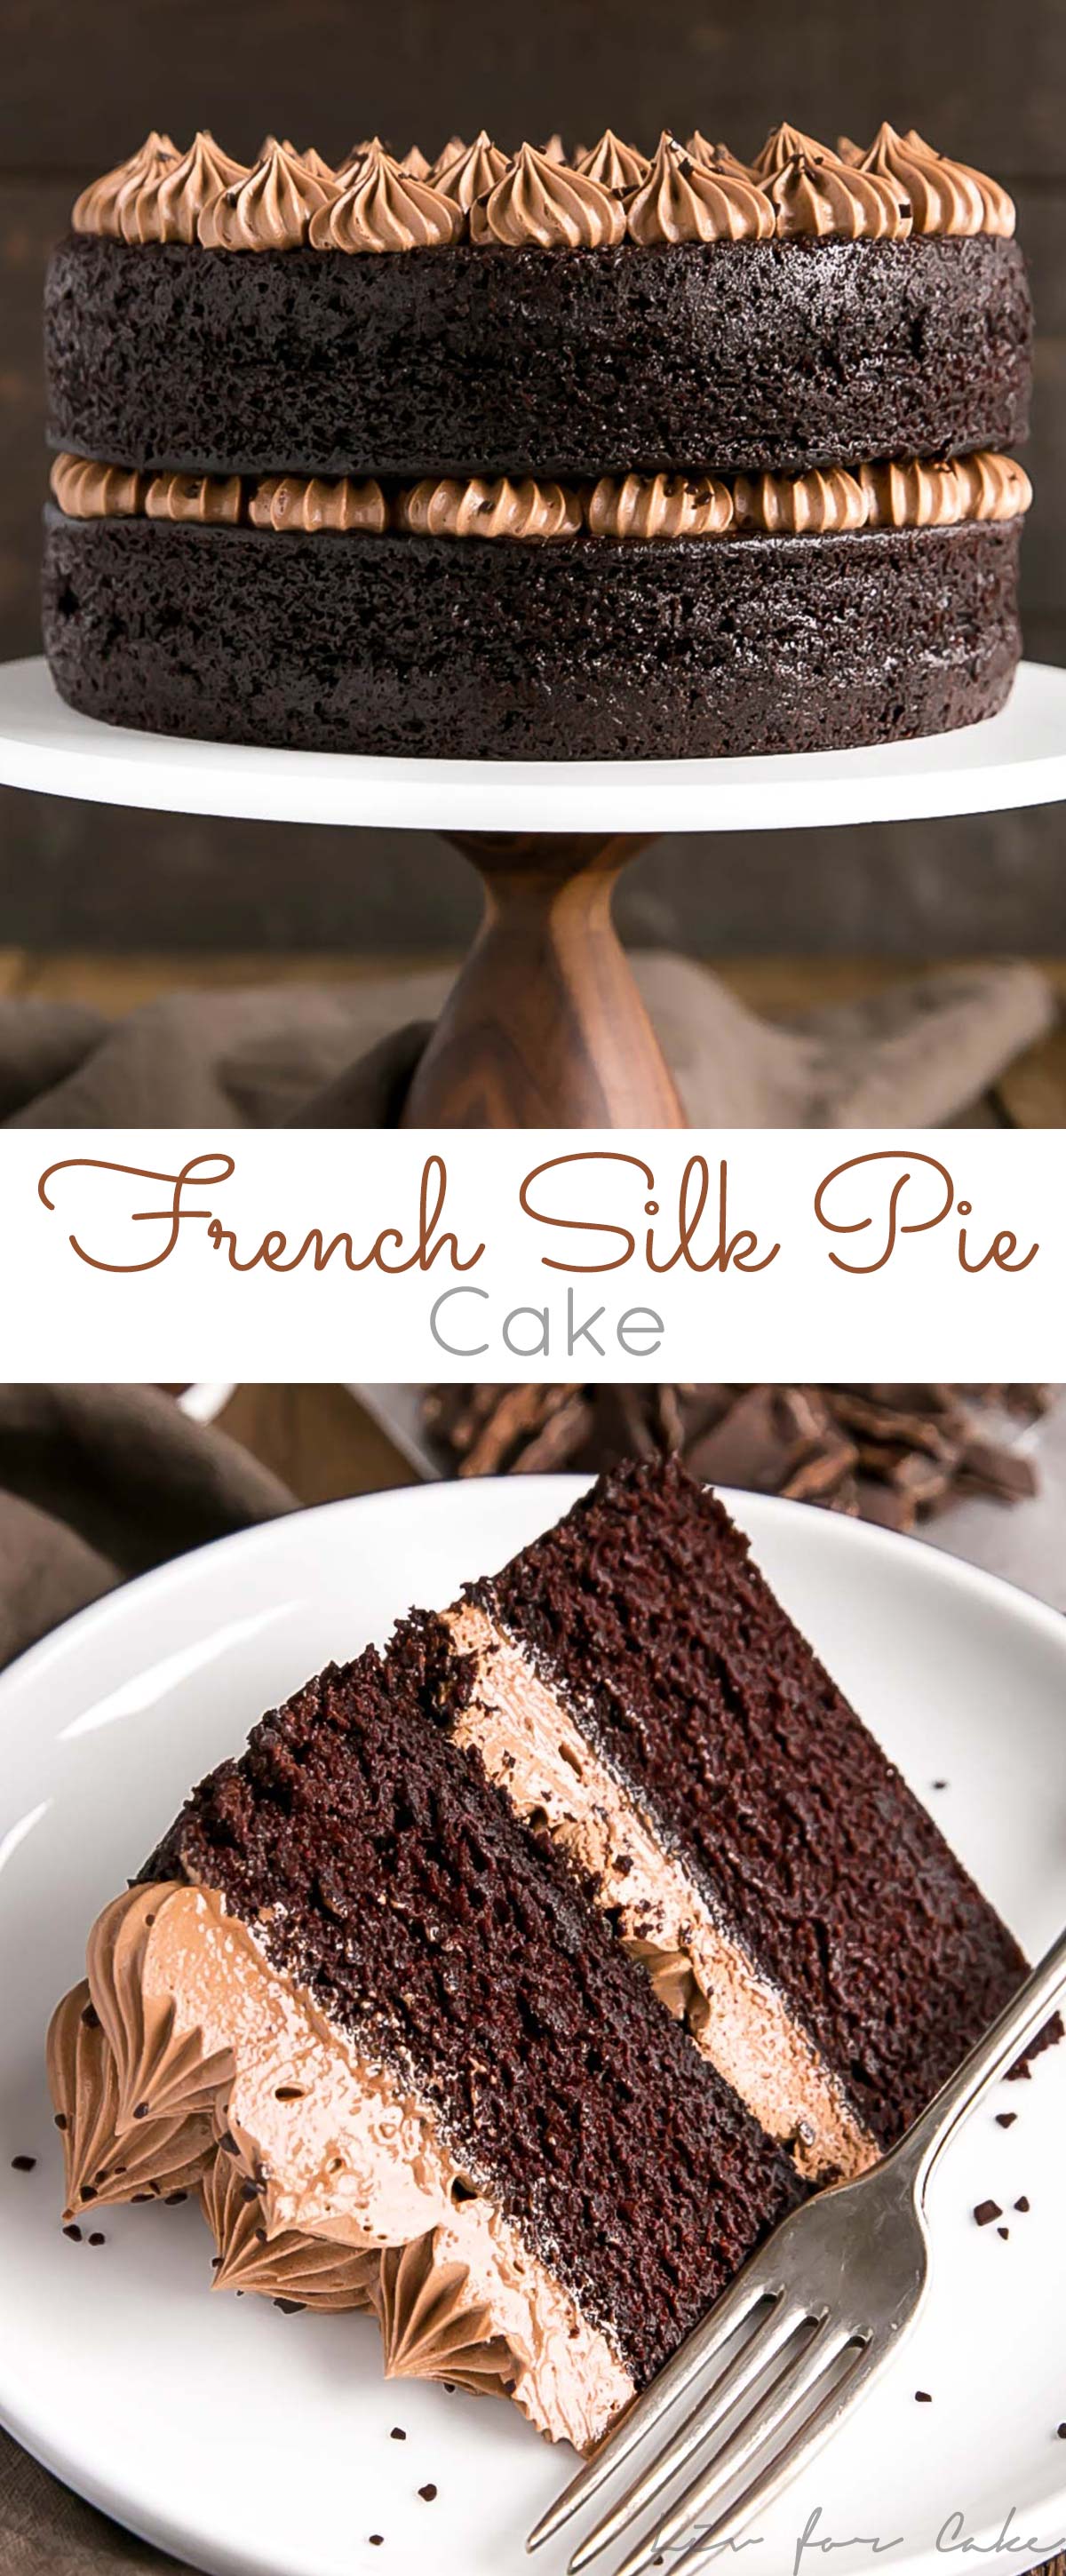 Chocolate cake photo collage